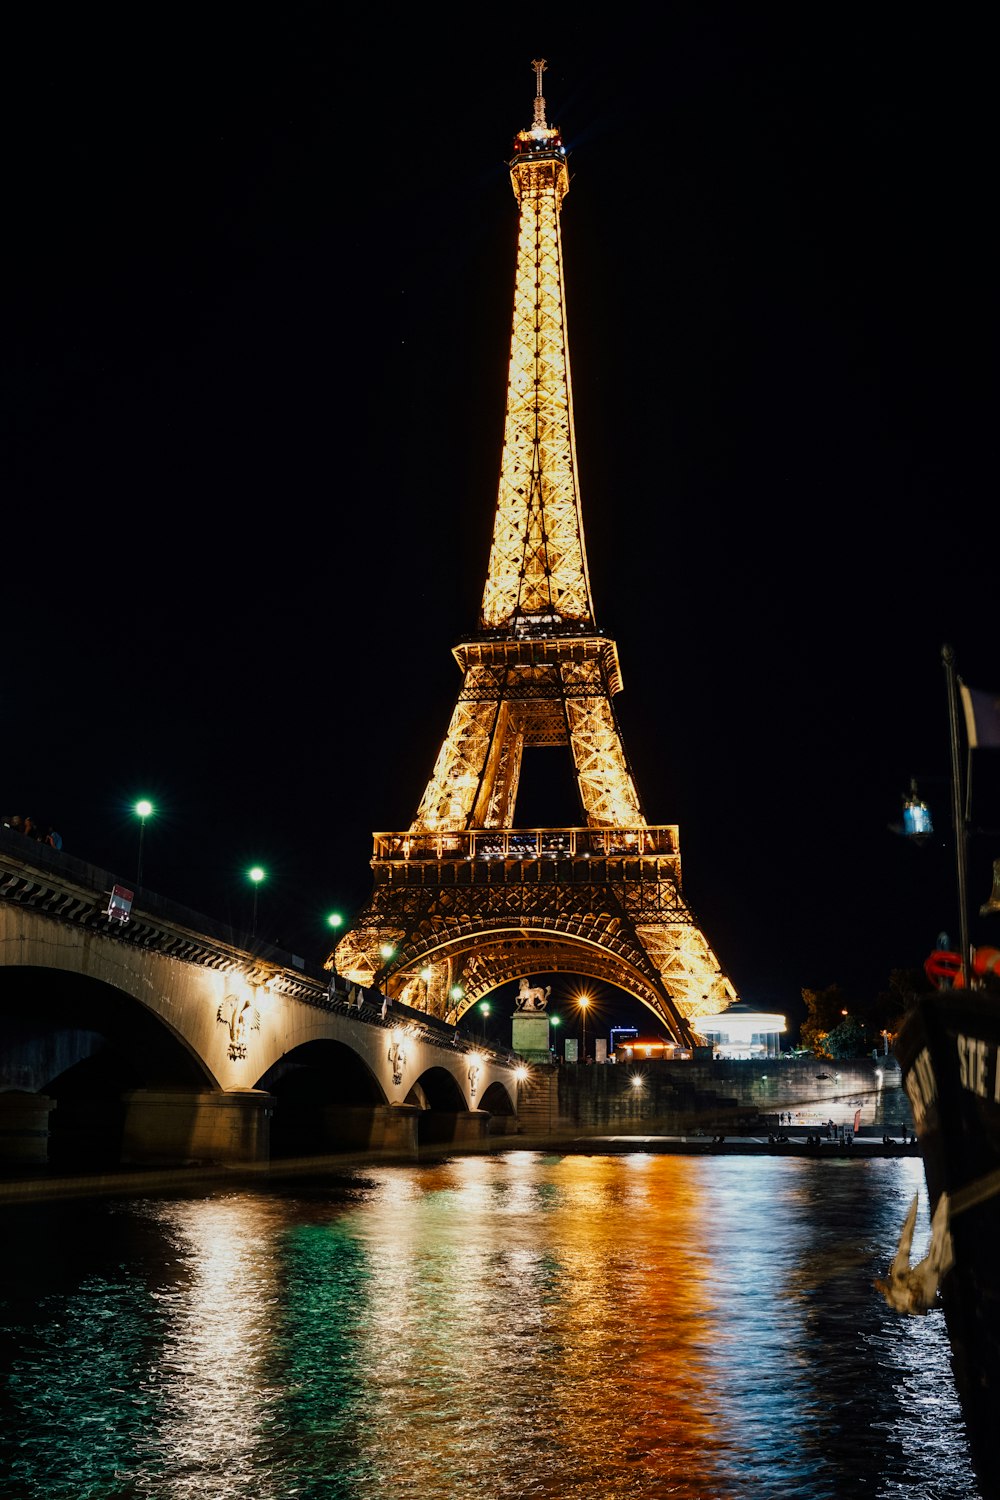 Eiffel Tower at night photo – Free Architecture Image on Unsplash